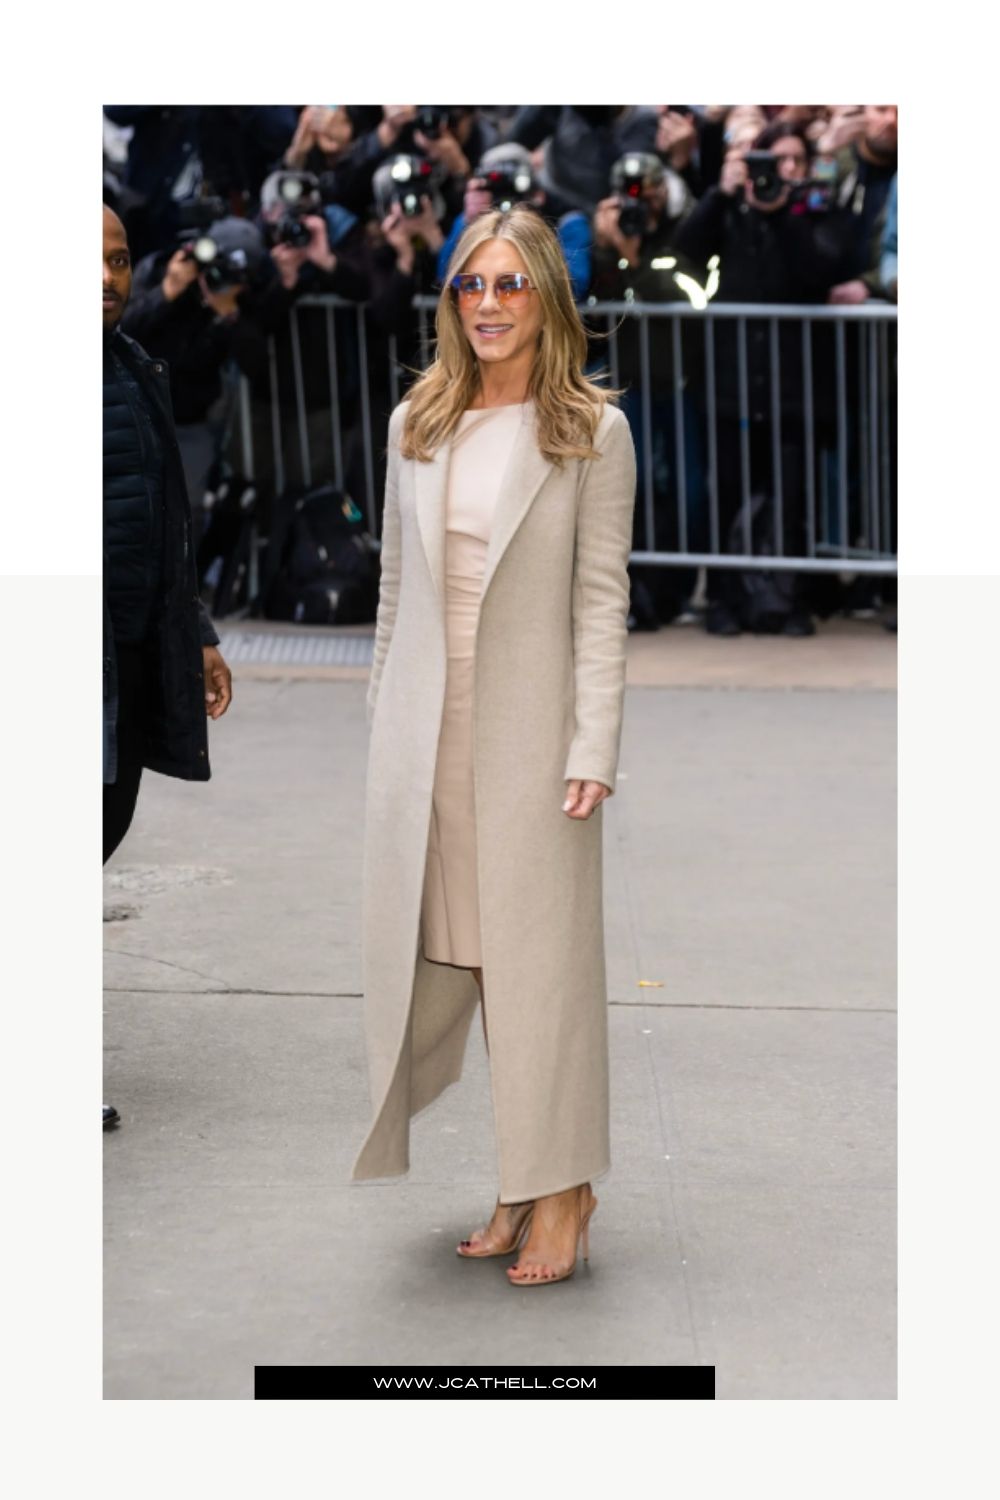 Jennifer Aniston: Stylish and Affordable Looks - J. Cathell